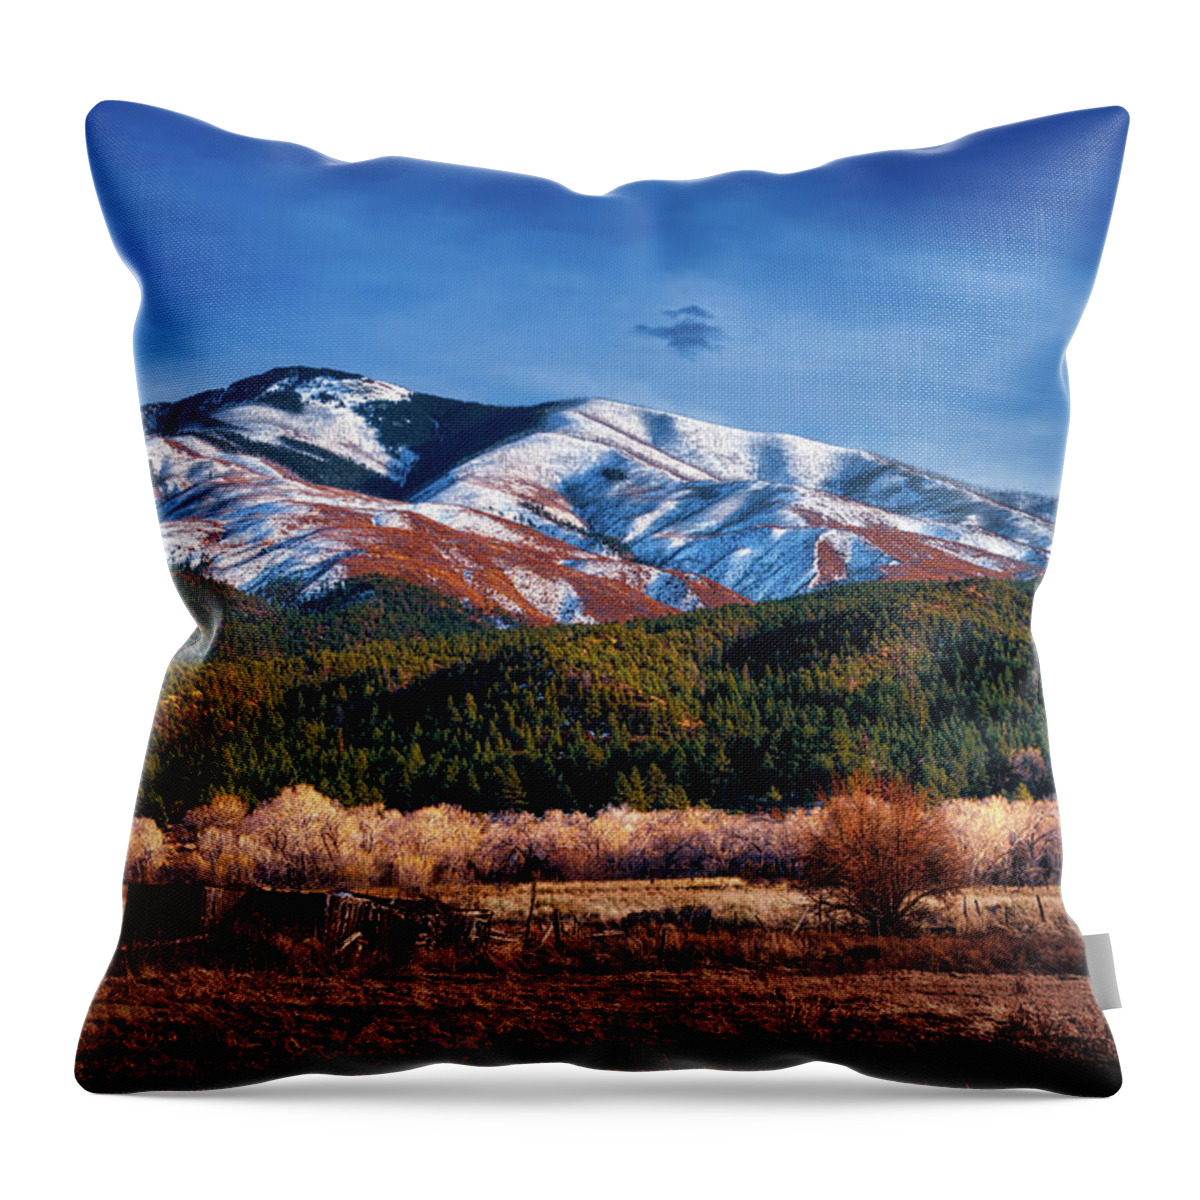 Copy Space Throw Pillow featuring the photograph Santa Fe Baldy Mountain by Robert FERD Frank